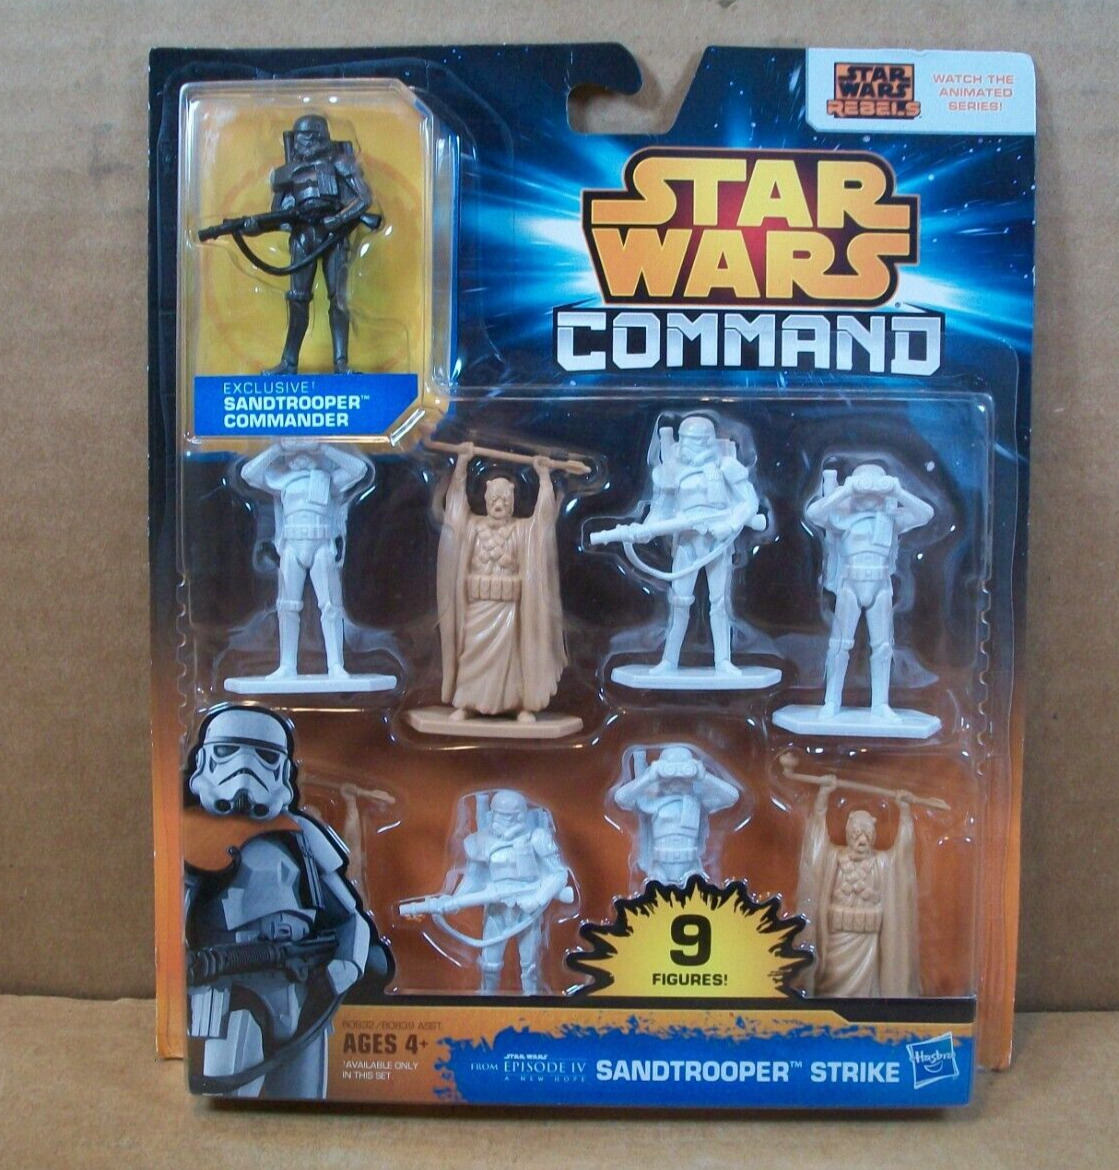 2014 Star Wars Command ~Sandtrooper Strike ~9 Figures ~Exclusive Sandtrooper....